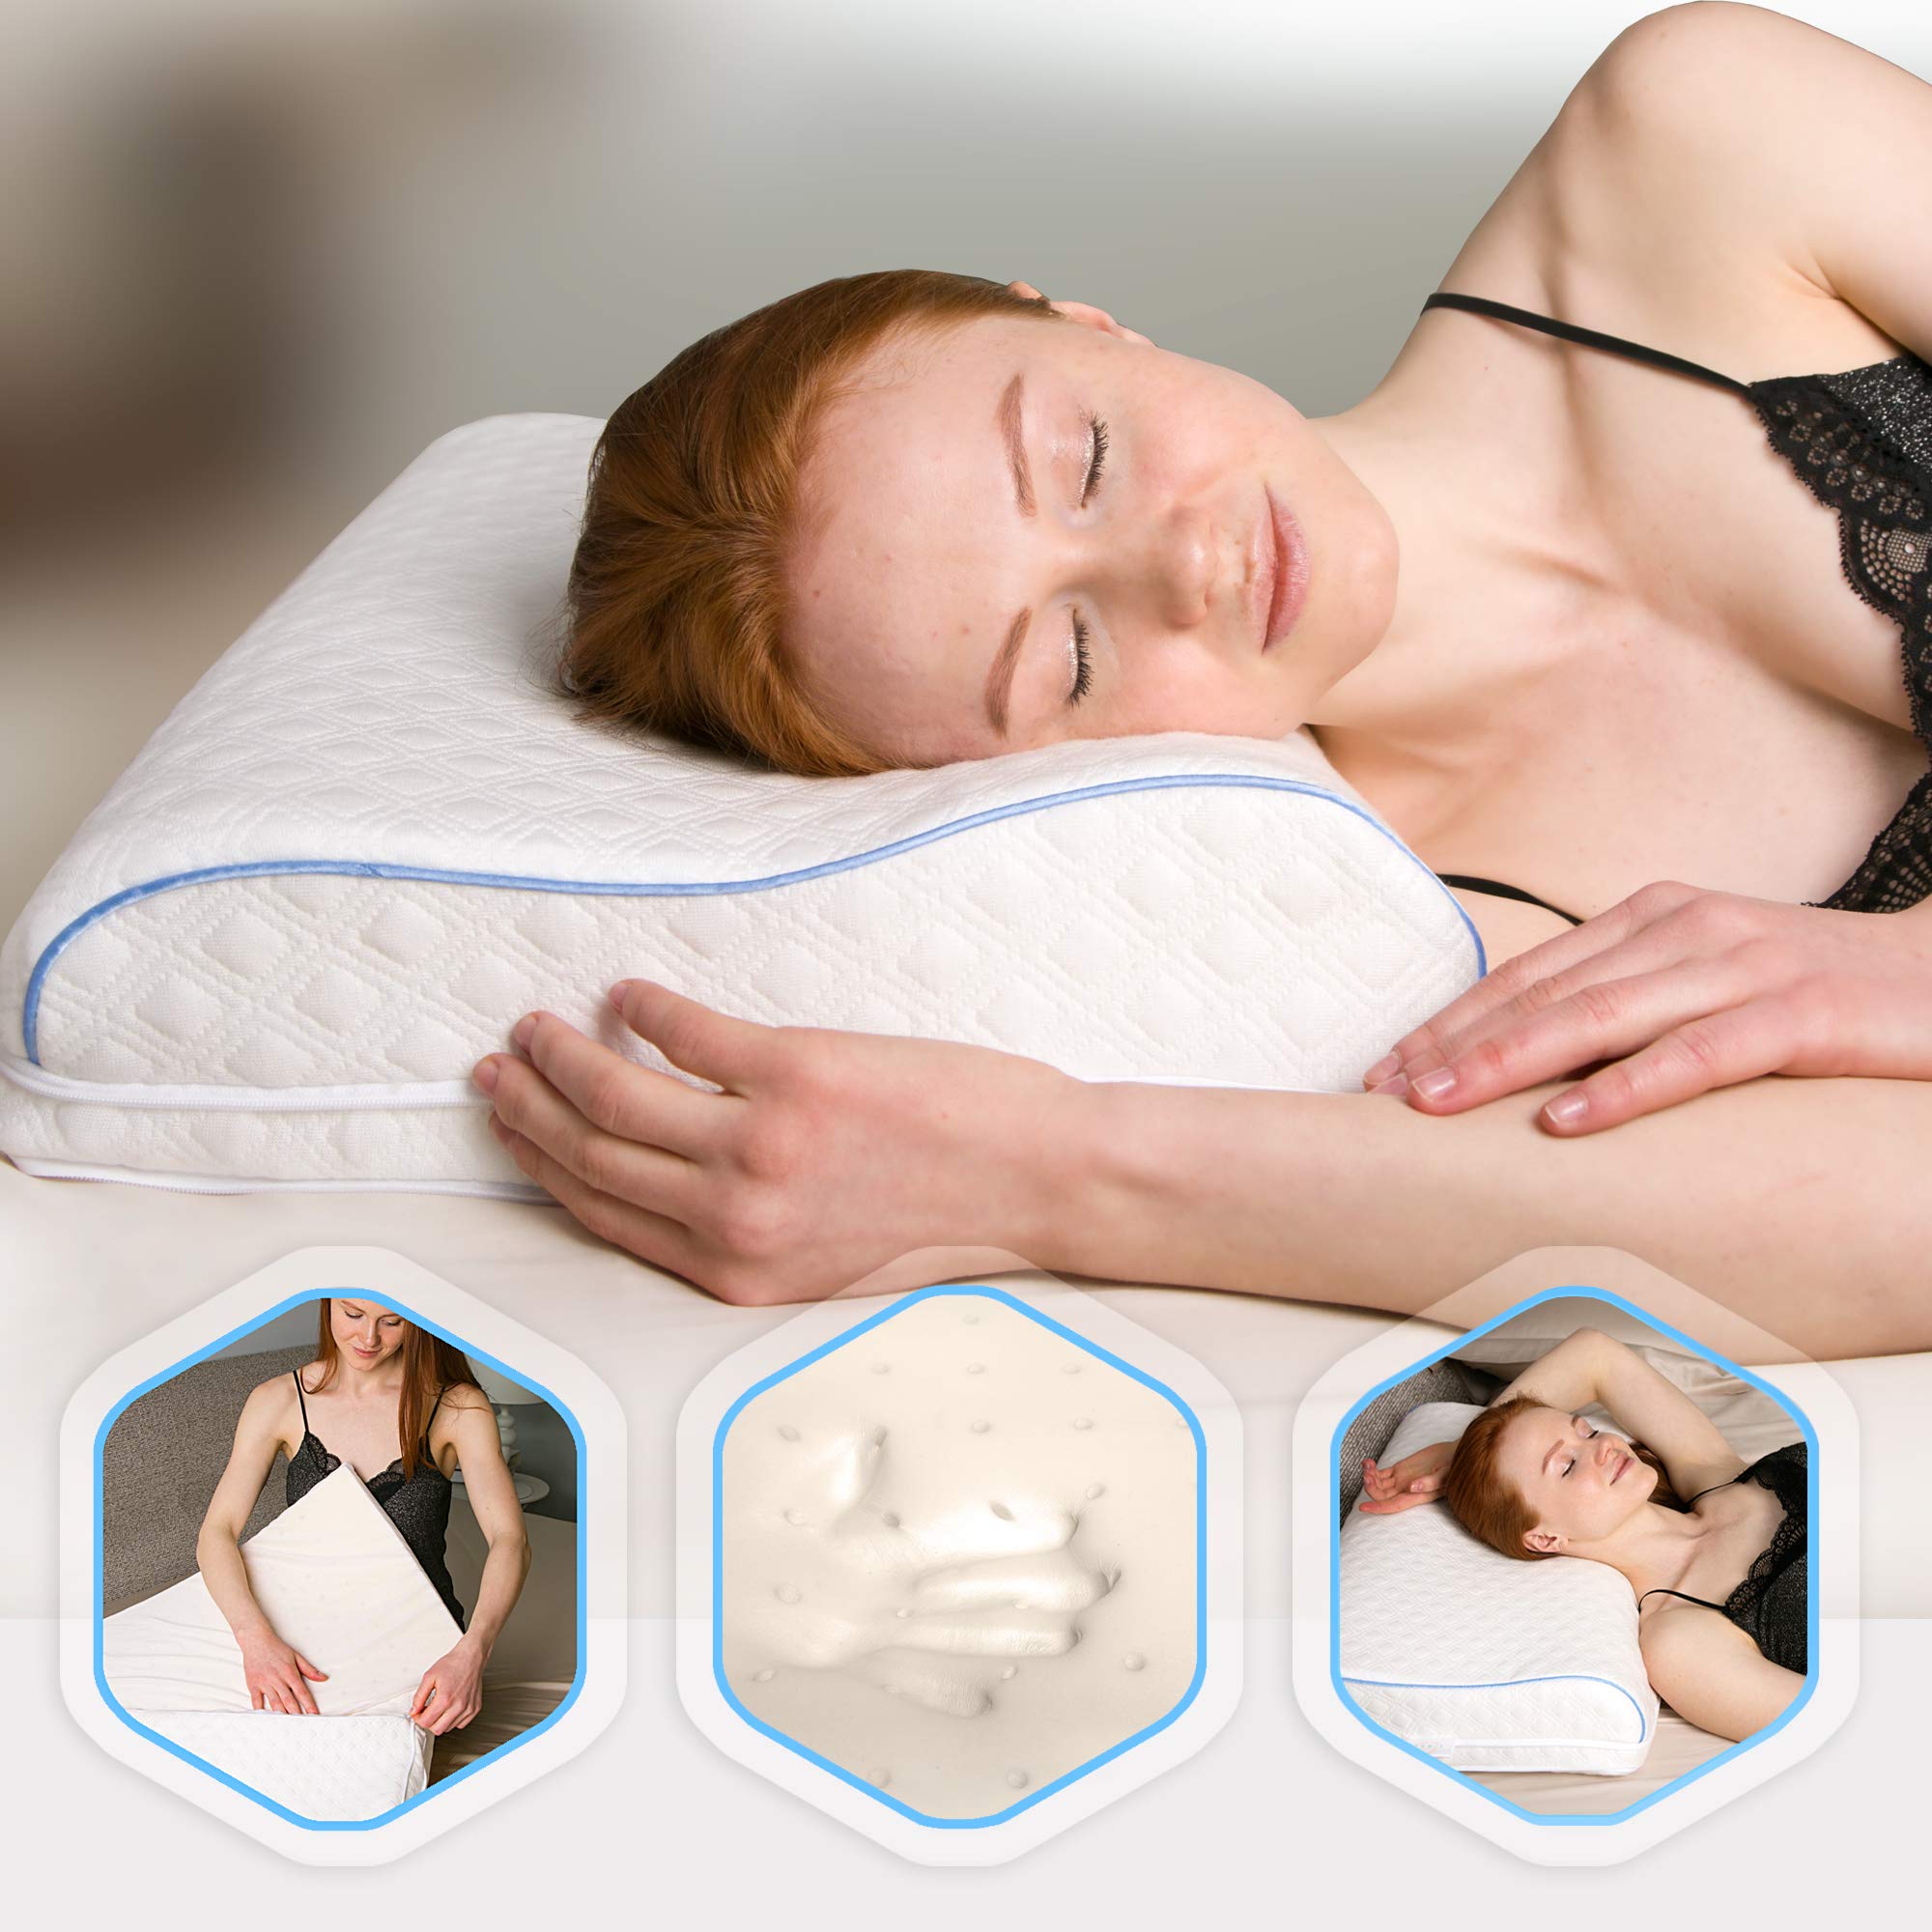 Adjustable Memory Foam Pillow Bedroom Sleeping Ergonomic Cervical